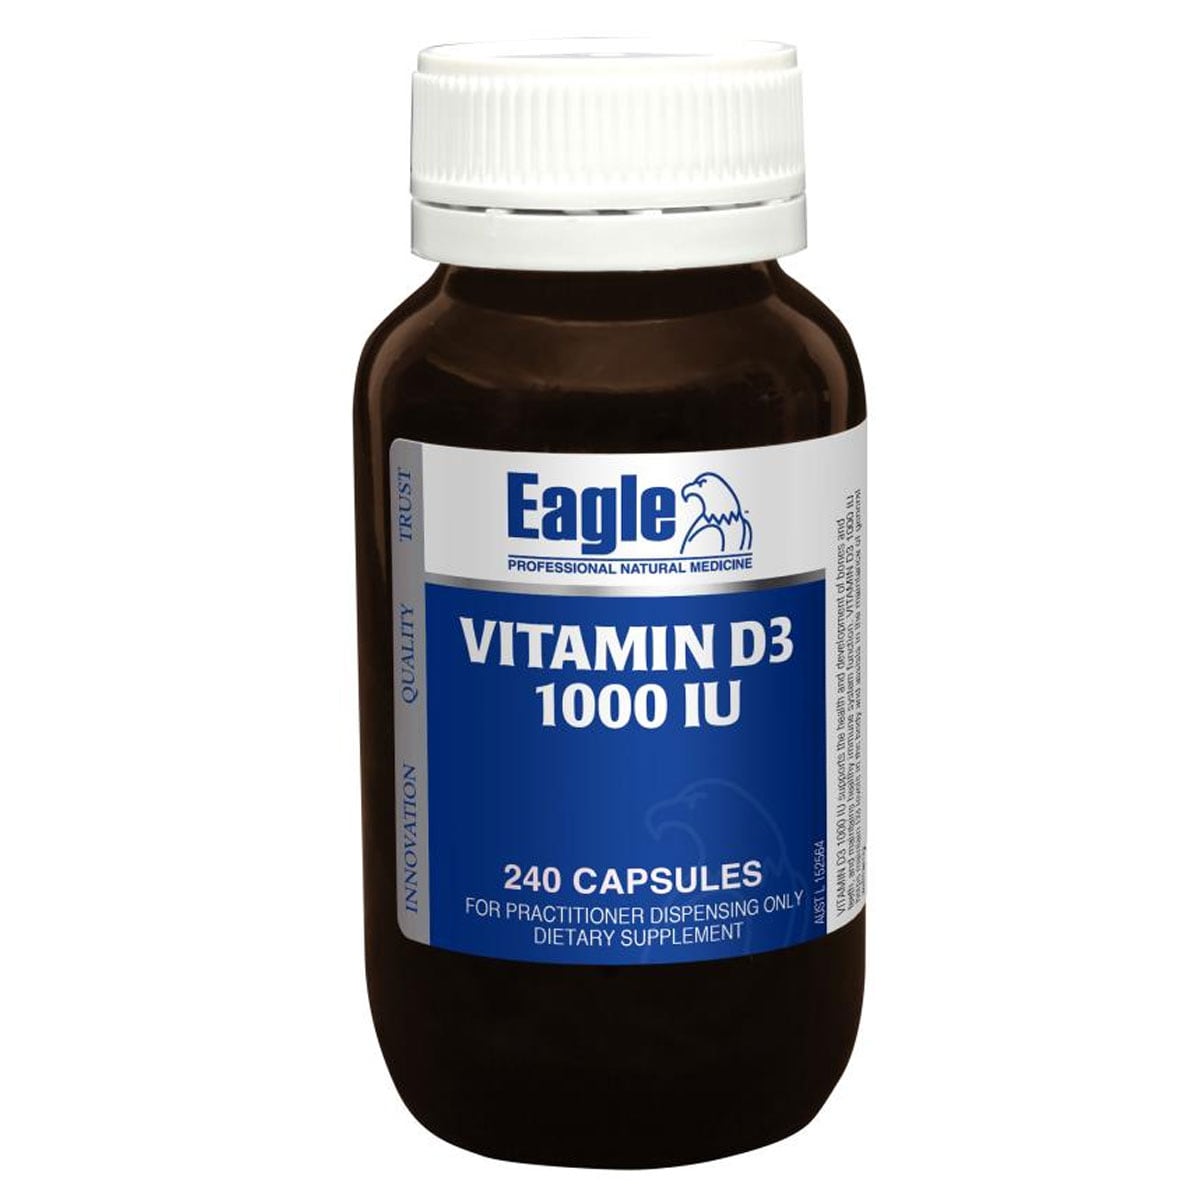 Eagle Vitamin D3 1000 IU 240 Capsules